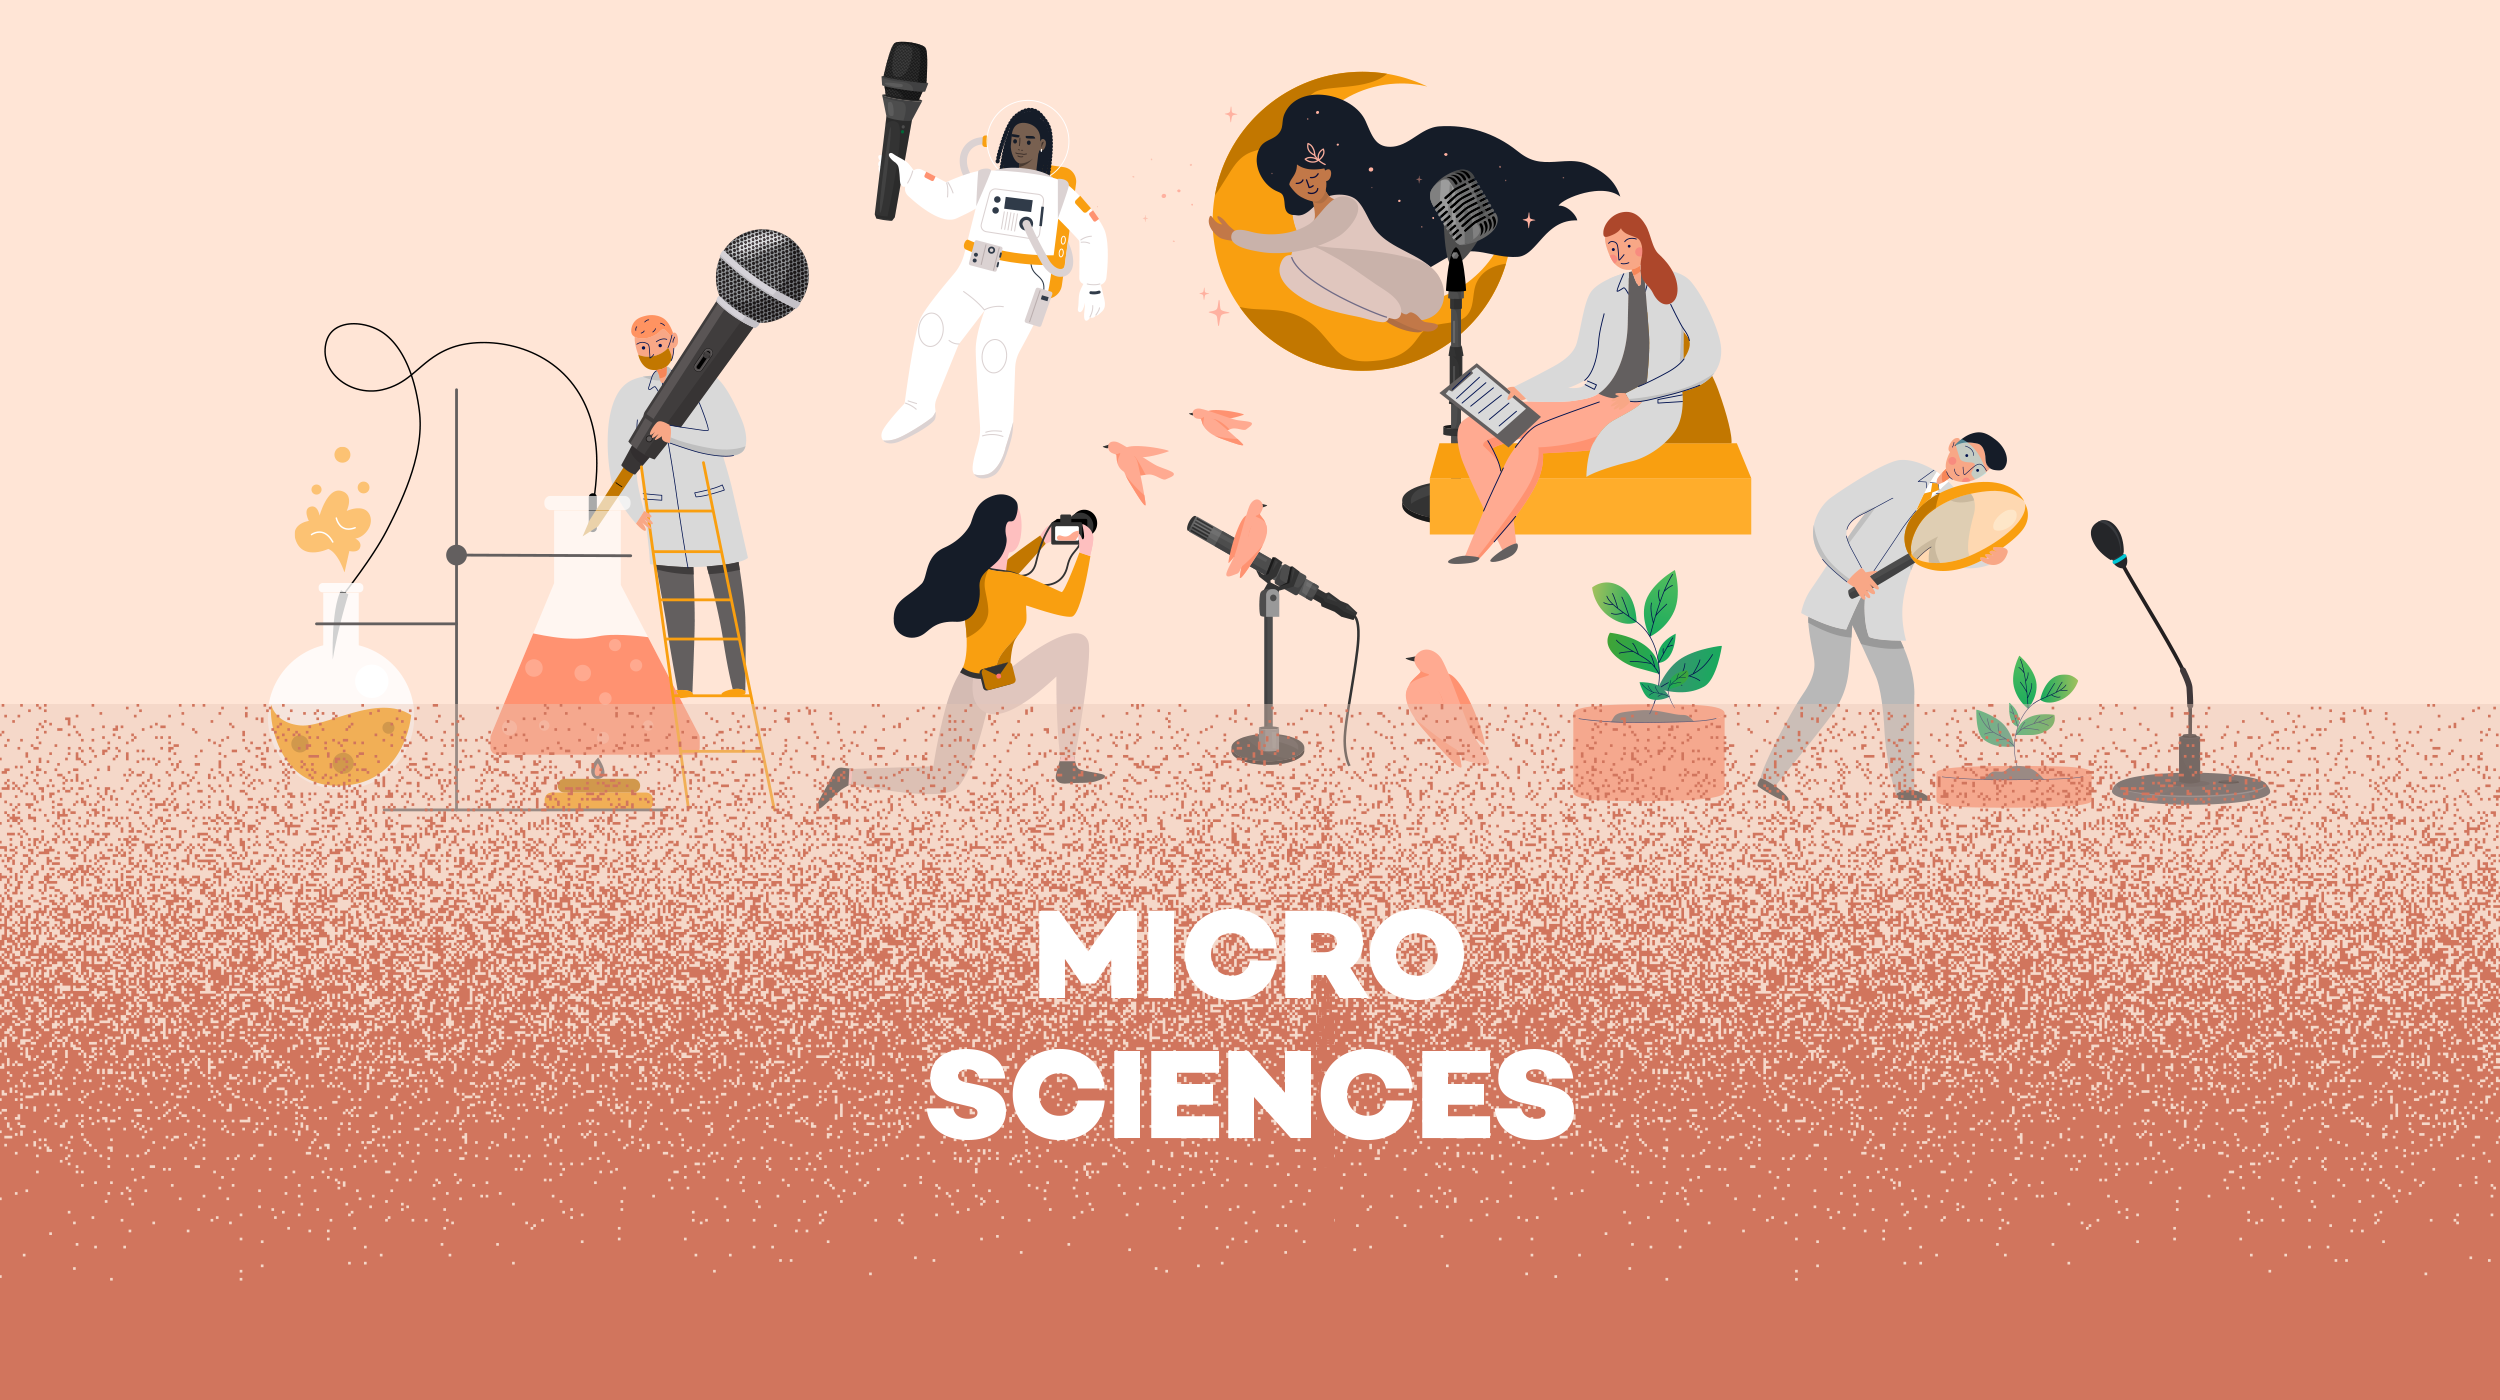 Micro sciences